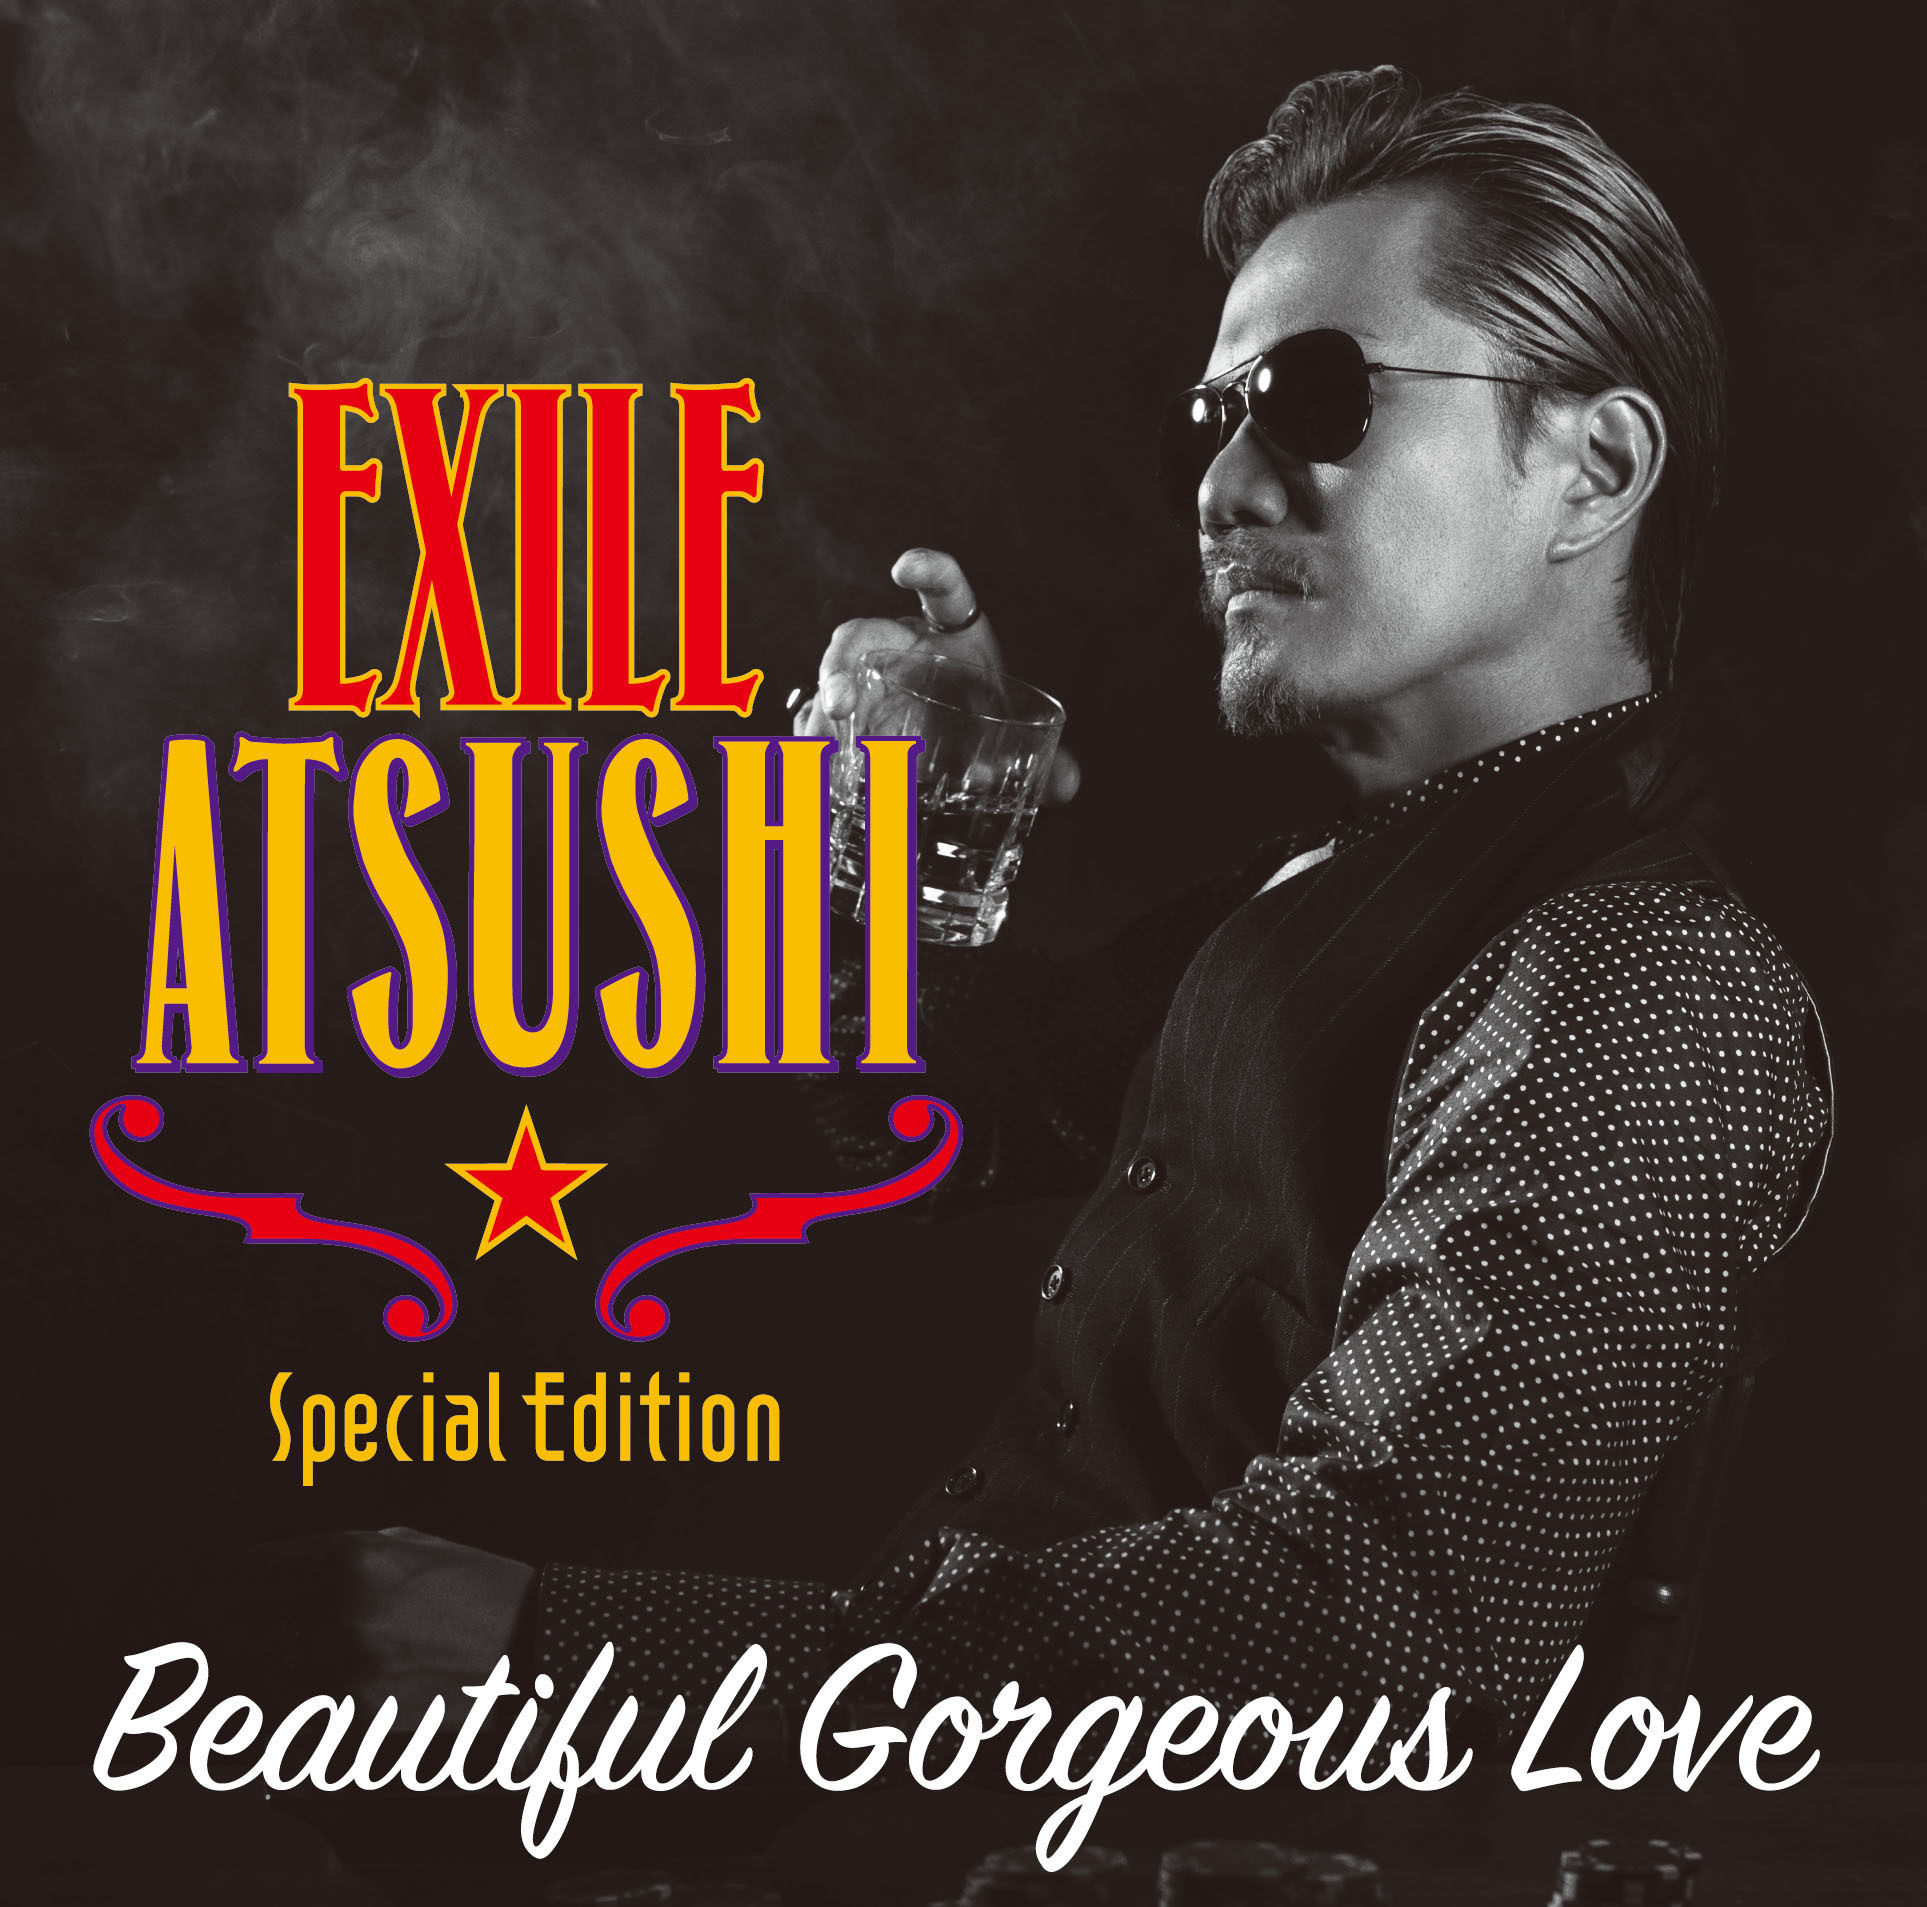 EXILE ATSUSHI 